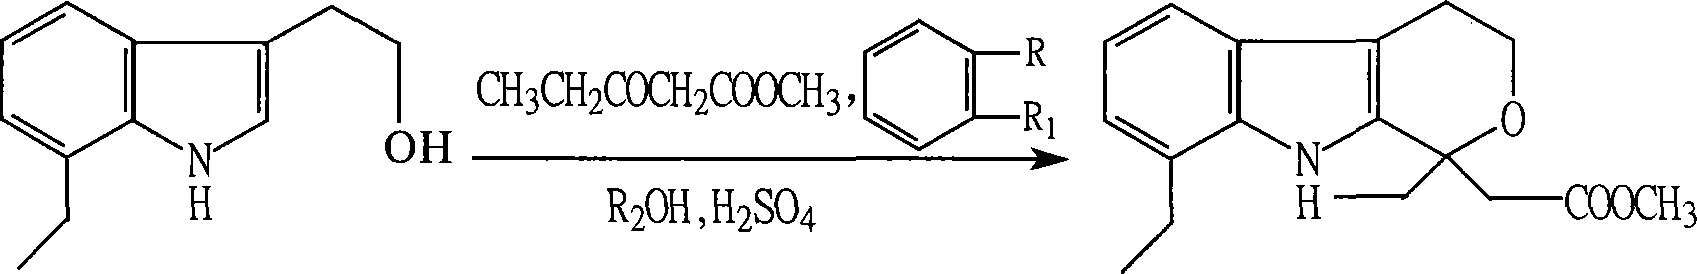 Method for preparing etodolac methyl ester